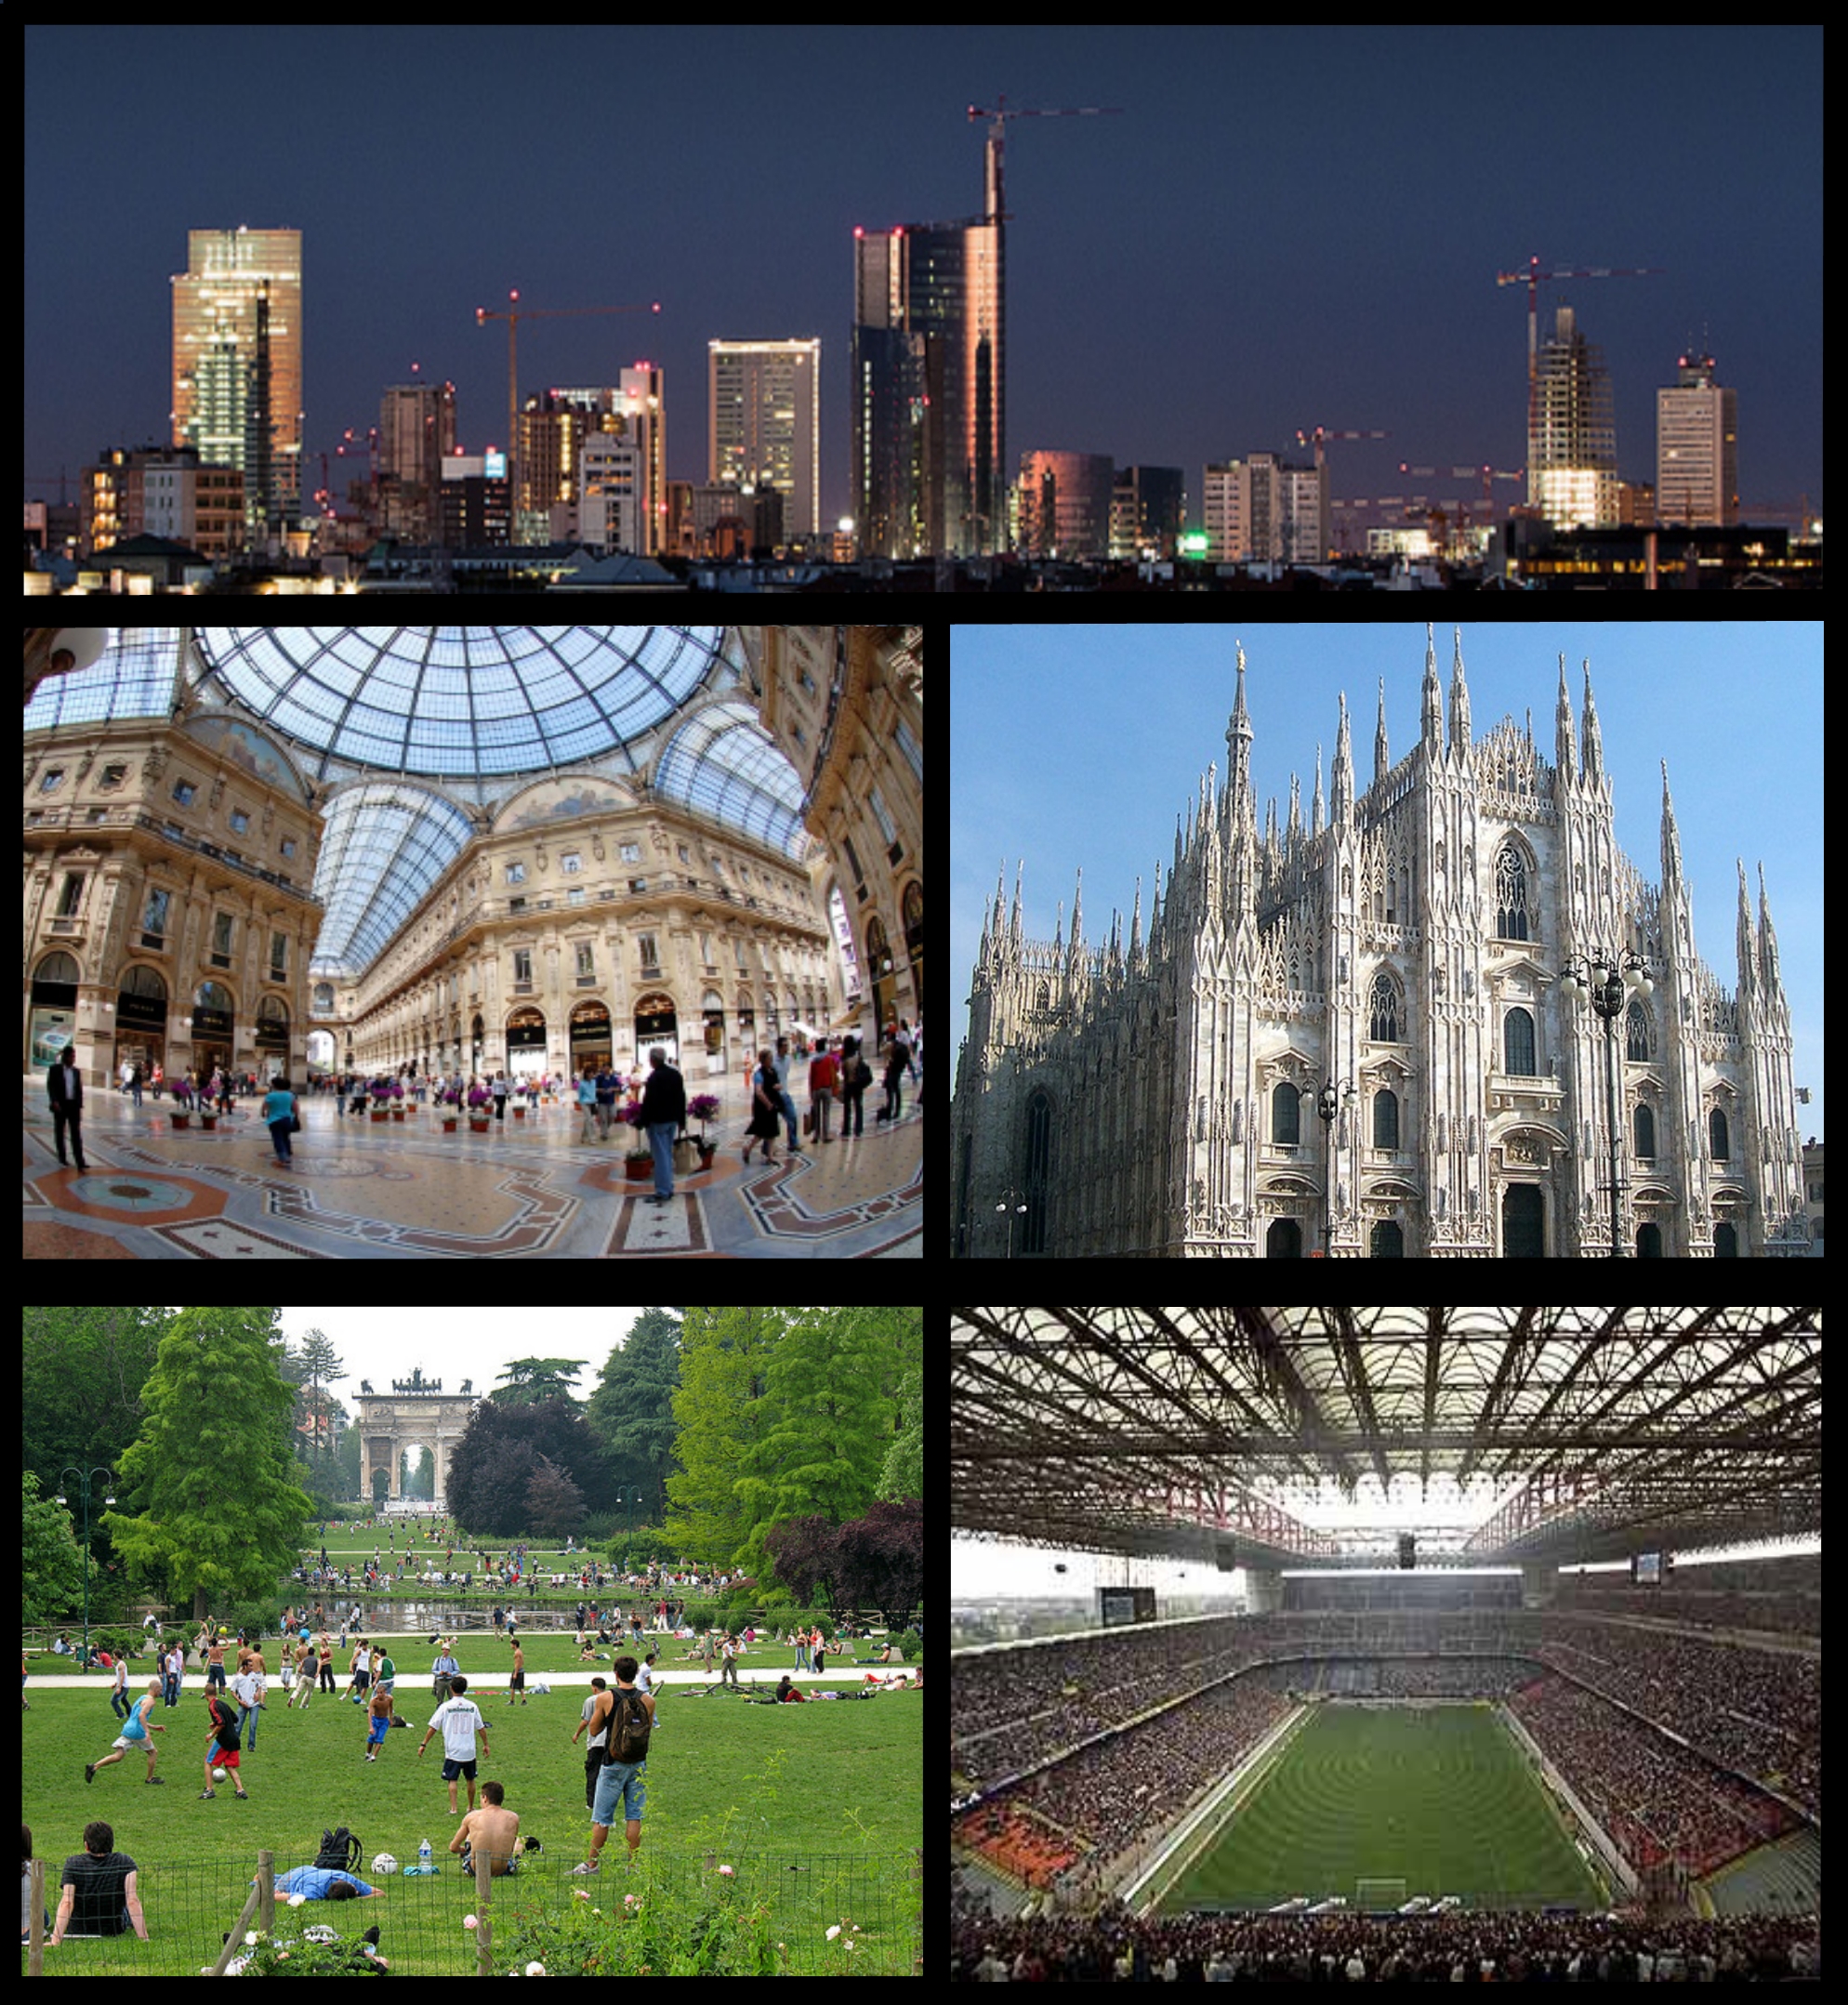 Source: http://en.wikipedia.org/wiki/File:Milano_collage.jpg